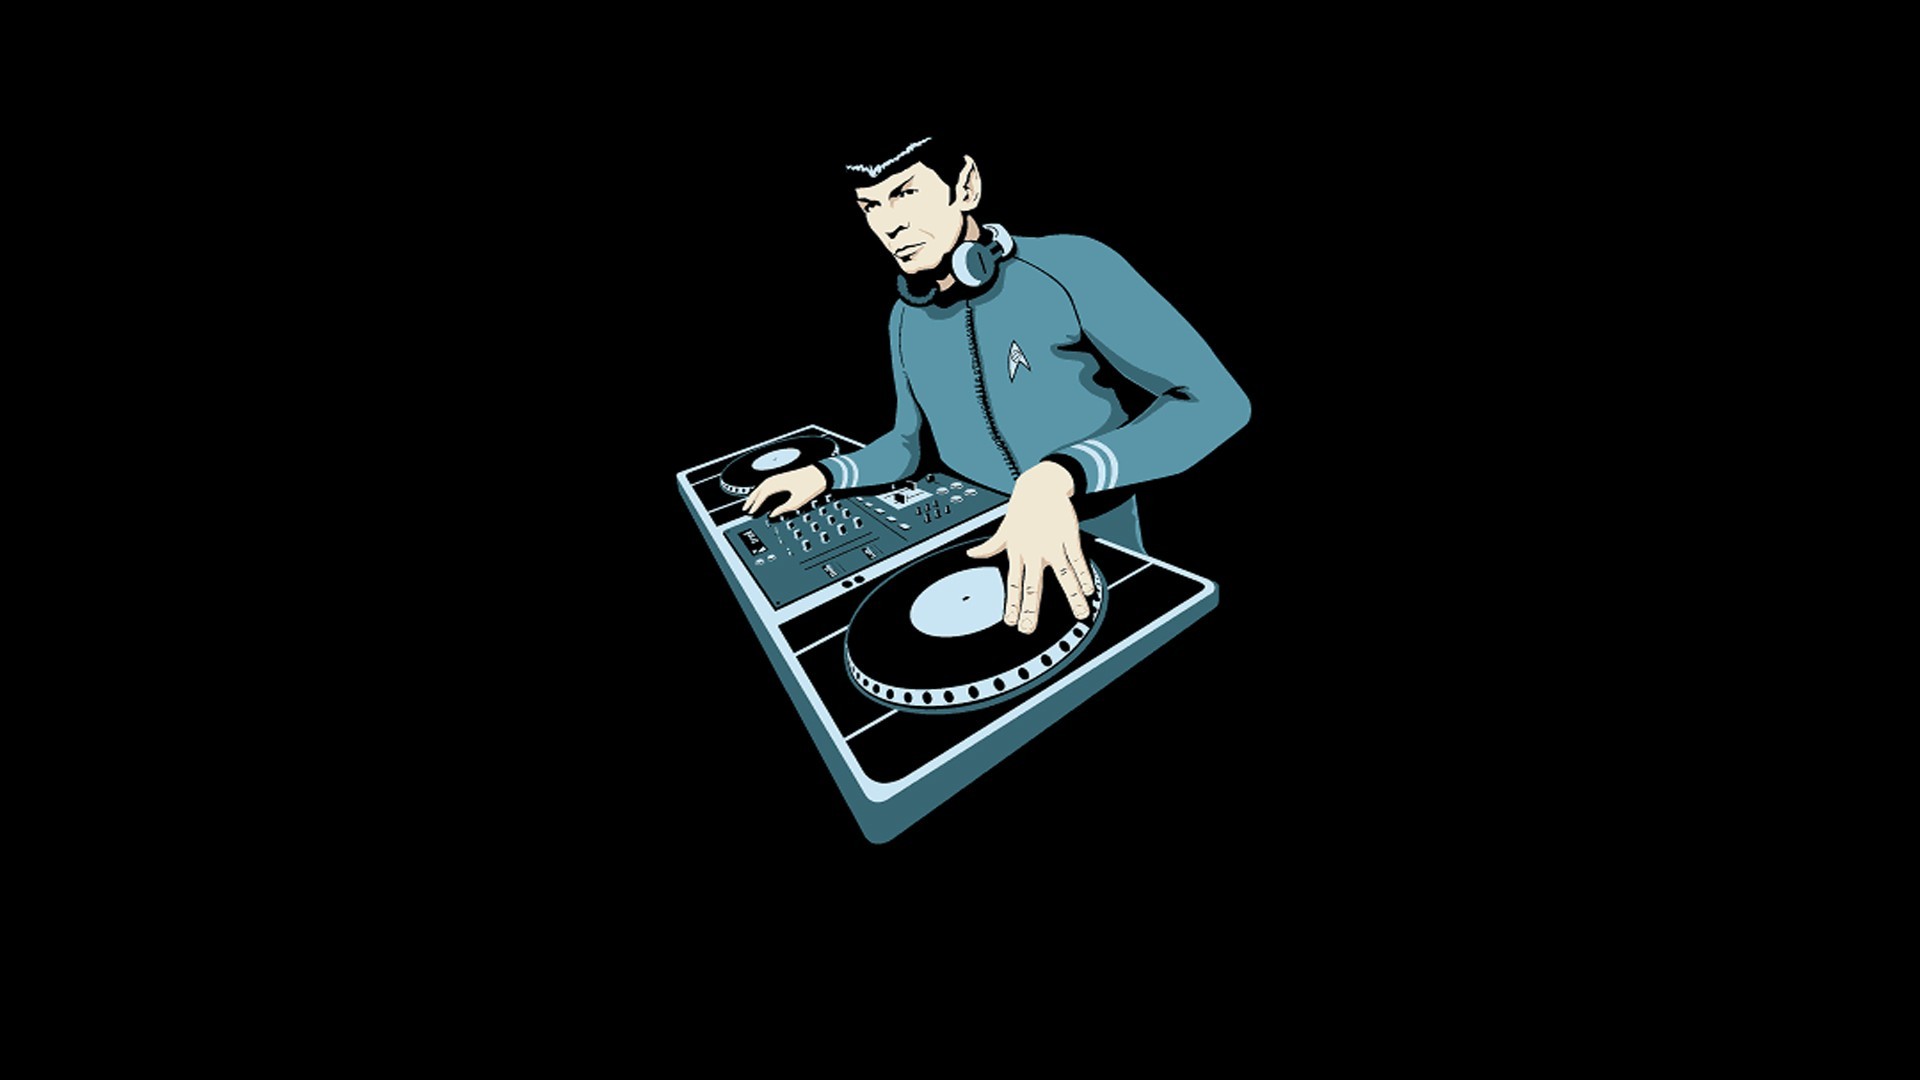 General 1920x1080 Live Long And Prosper Star Trek Spock vulcan humor audio-technica DJ music minimalism men TV series simple background black background headphones